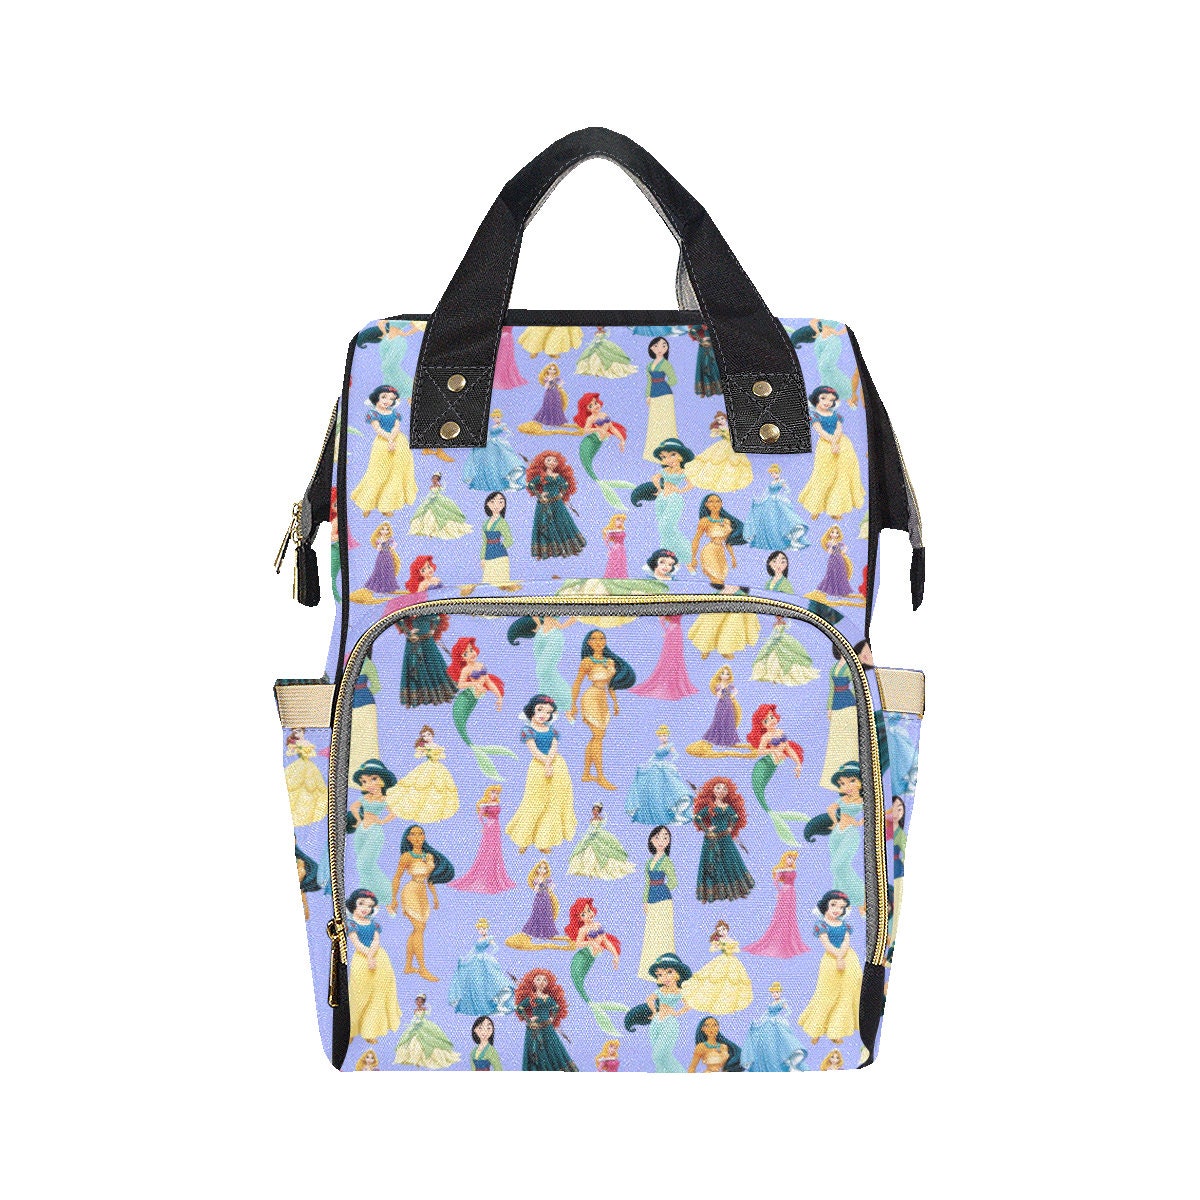 Petunia - Method Backpack diaper bag - Whimsical Belle Disney